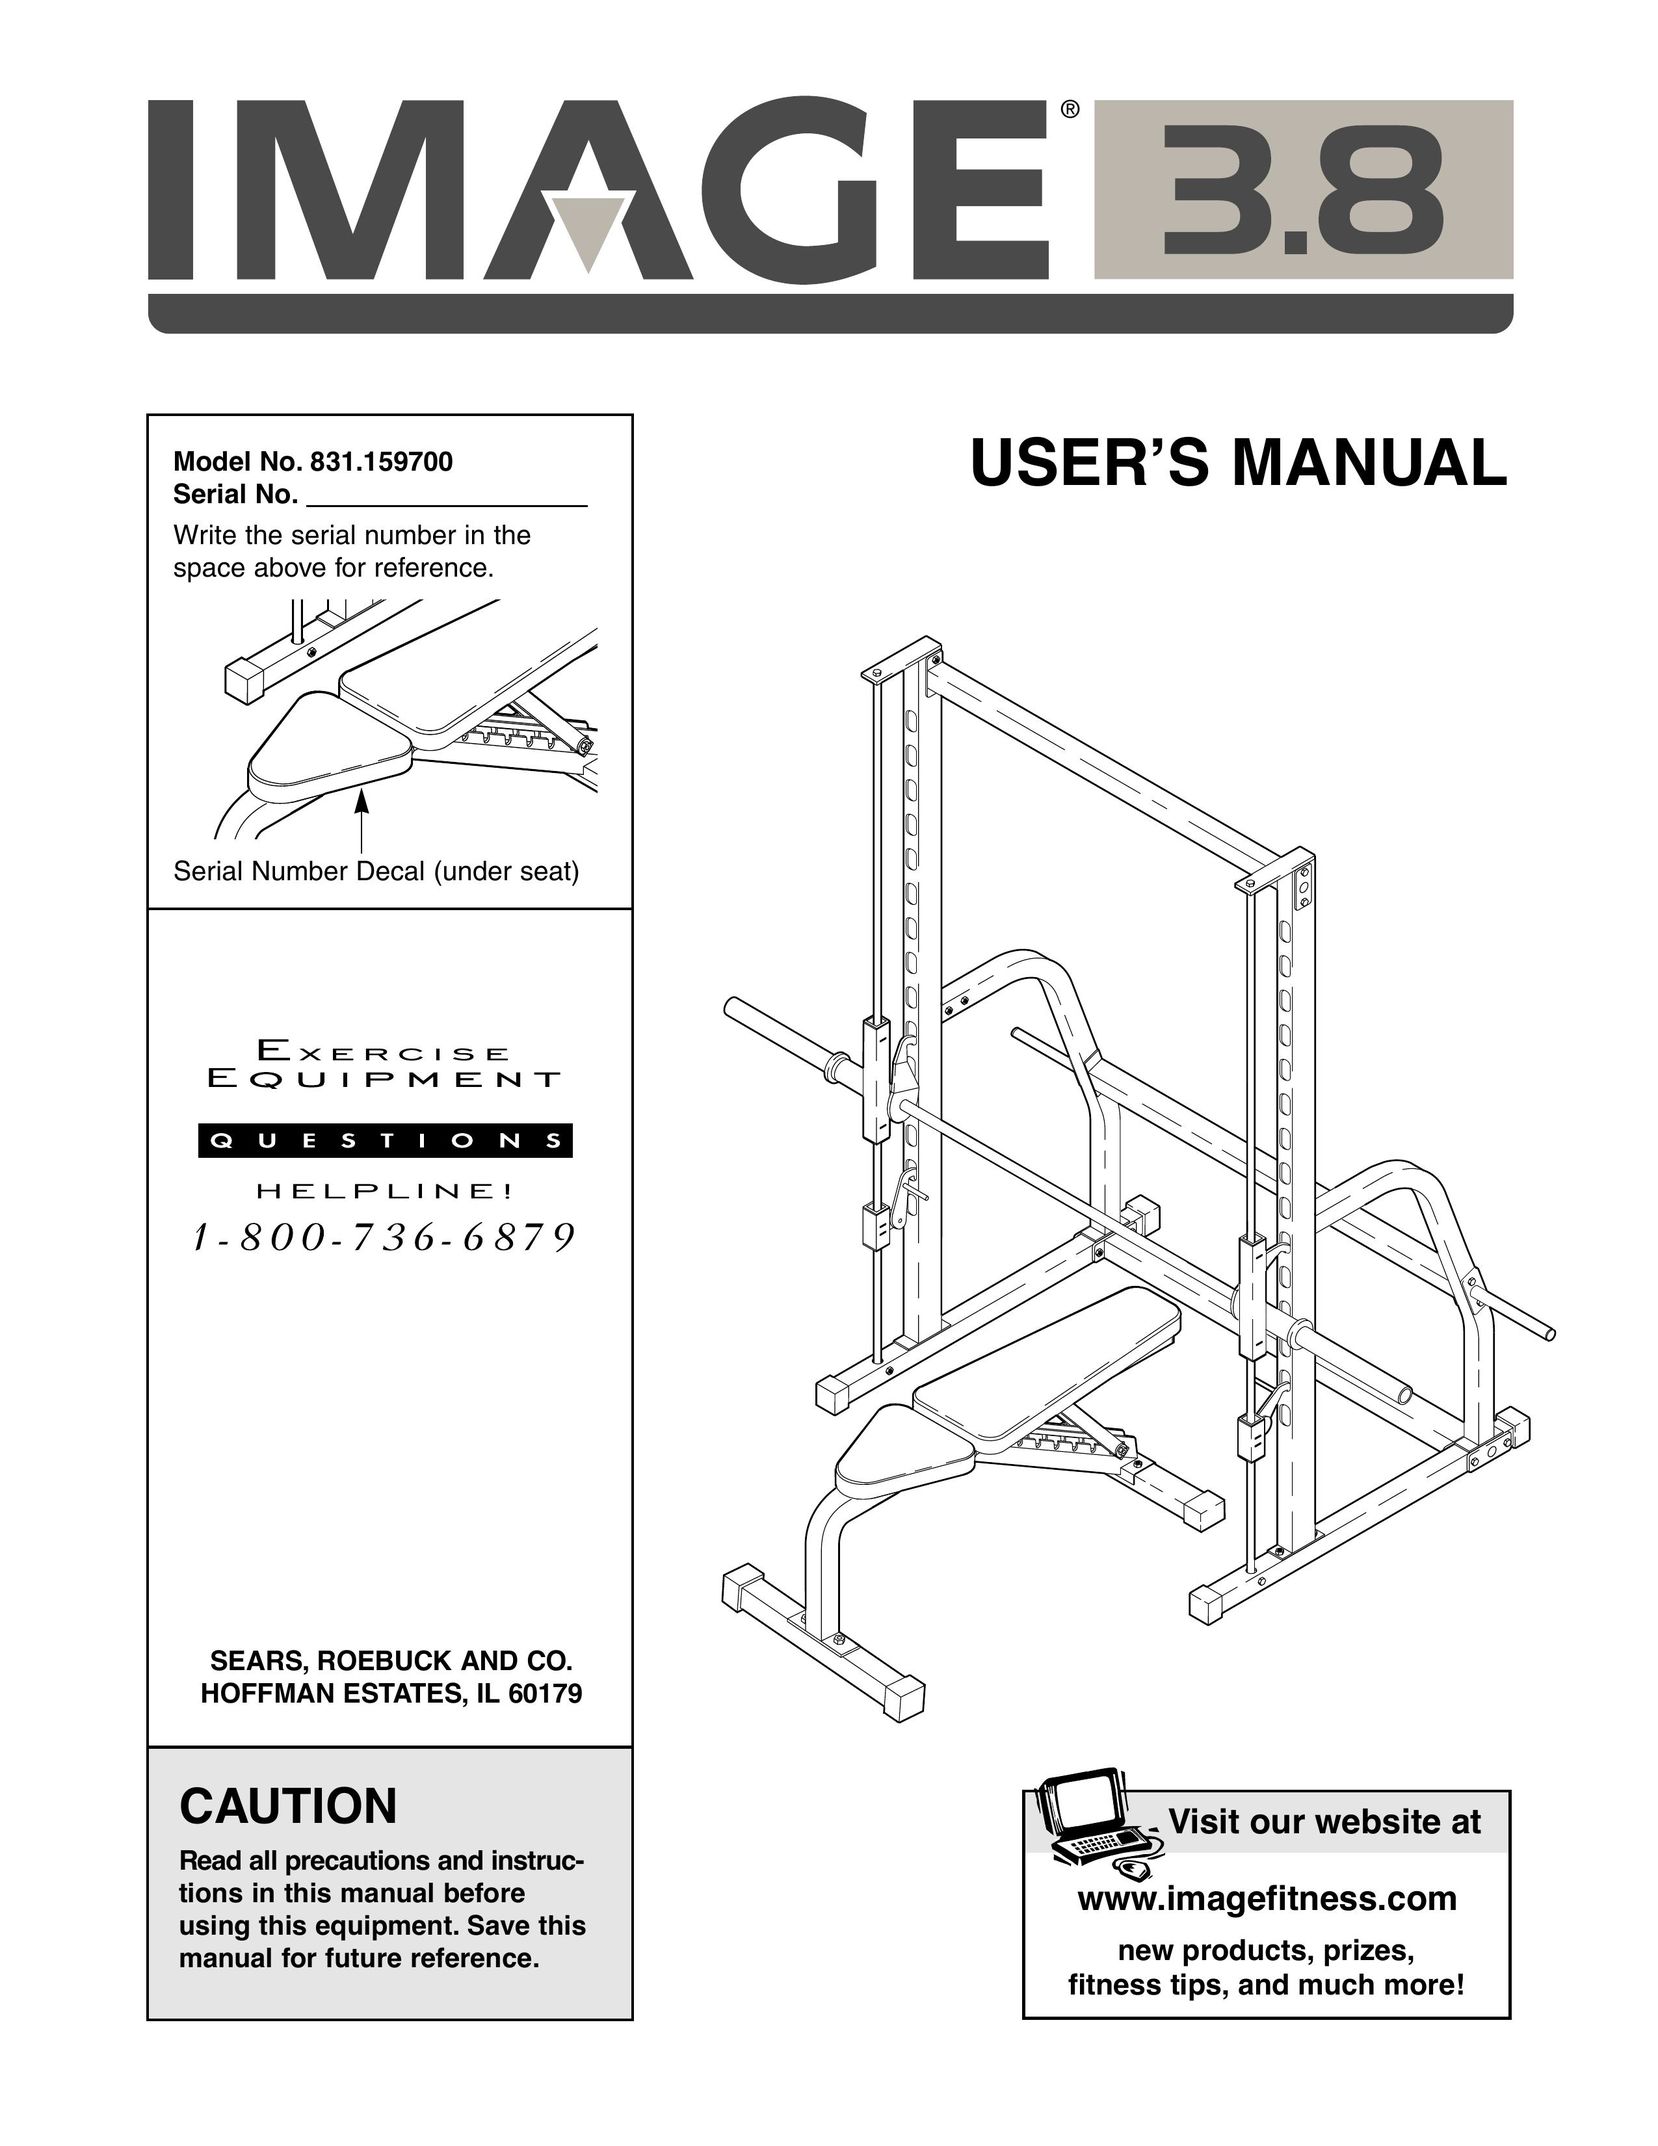 Image 831.159700 Home Gym User Manual